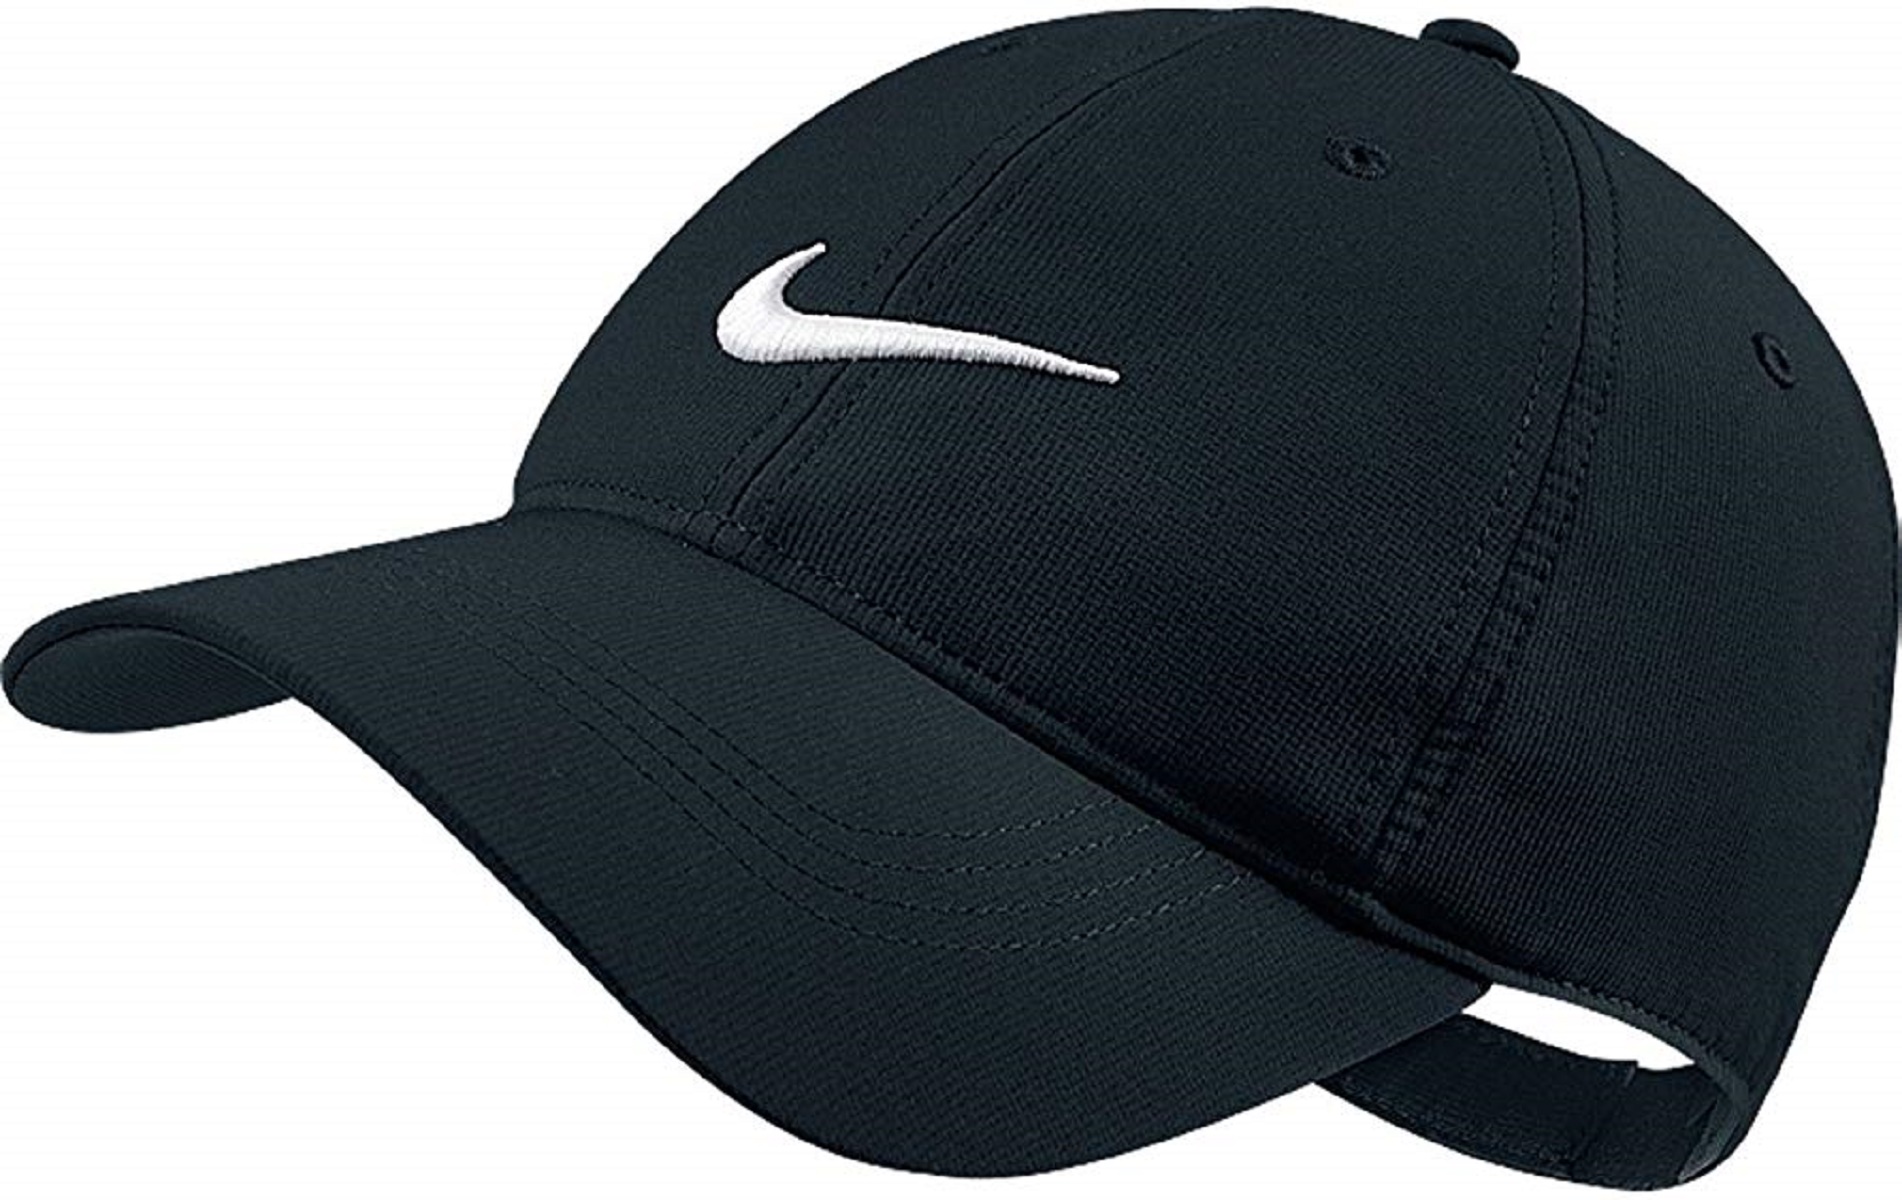 Nike Tech Golf Black/White Swoosh Cap - image 1 of 4